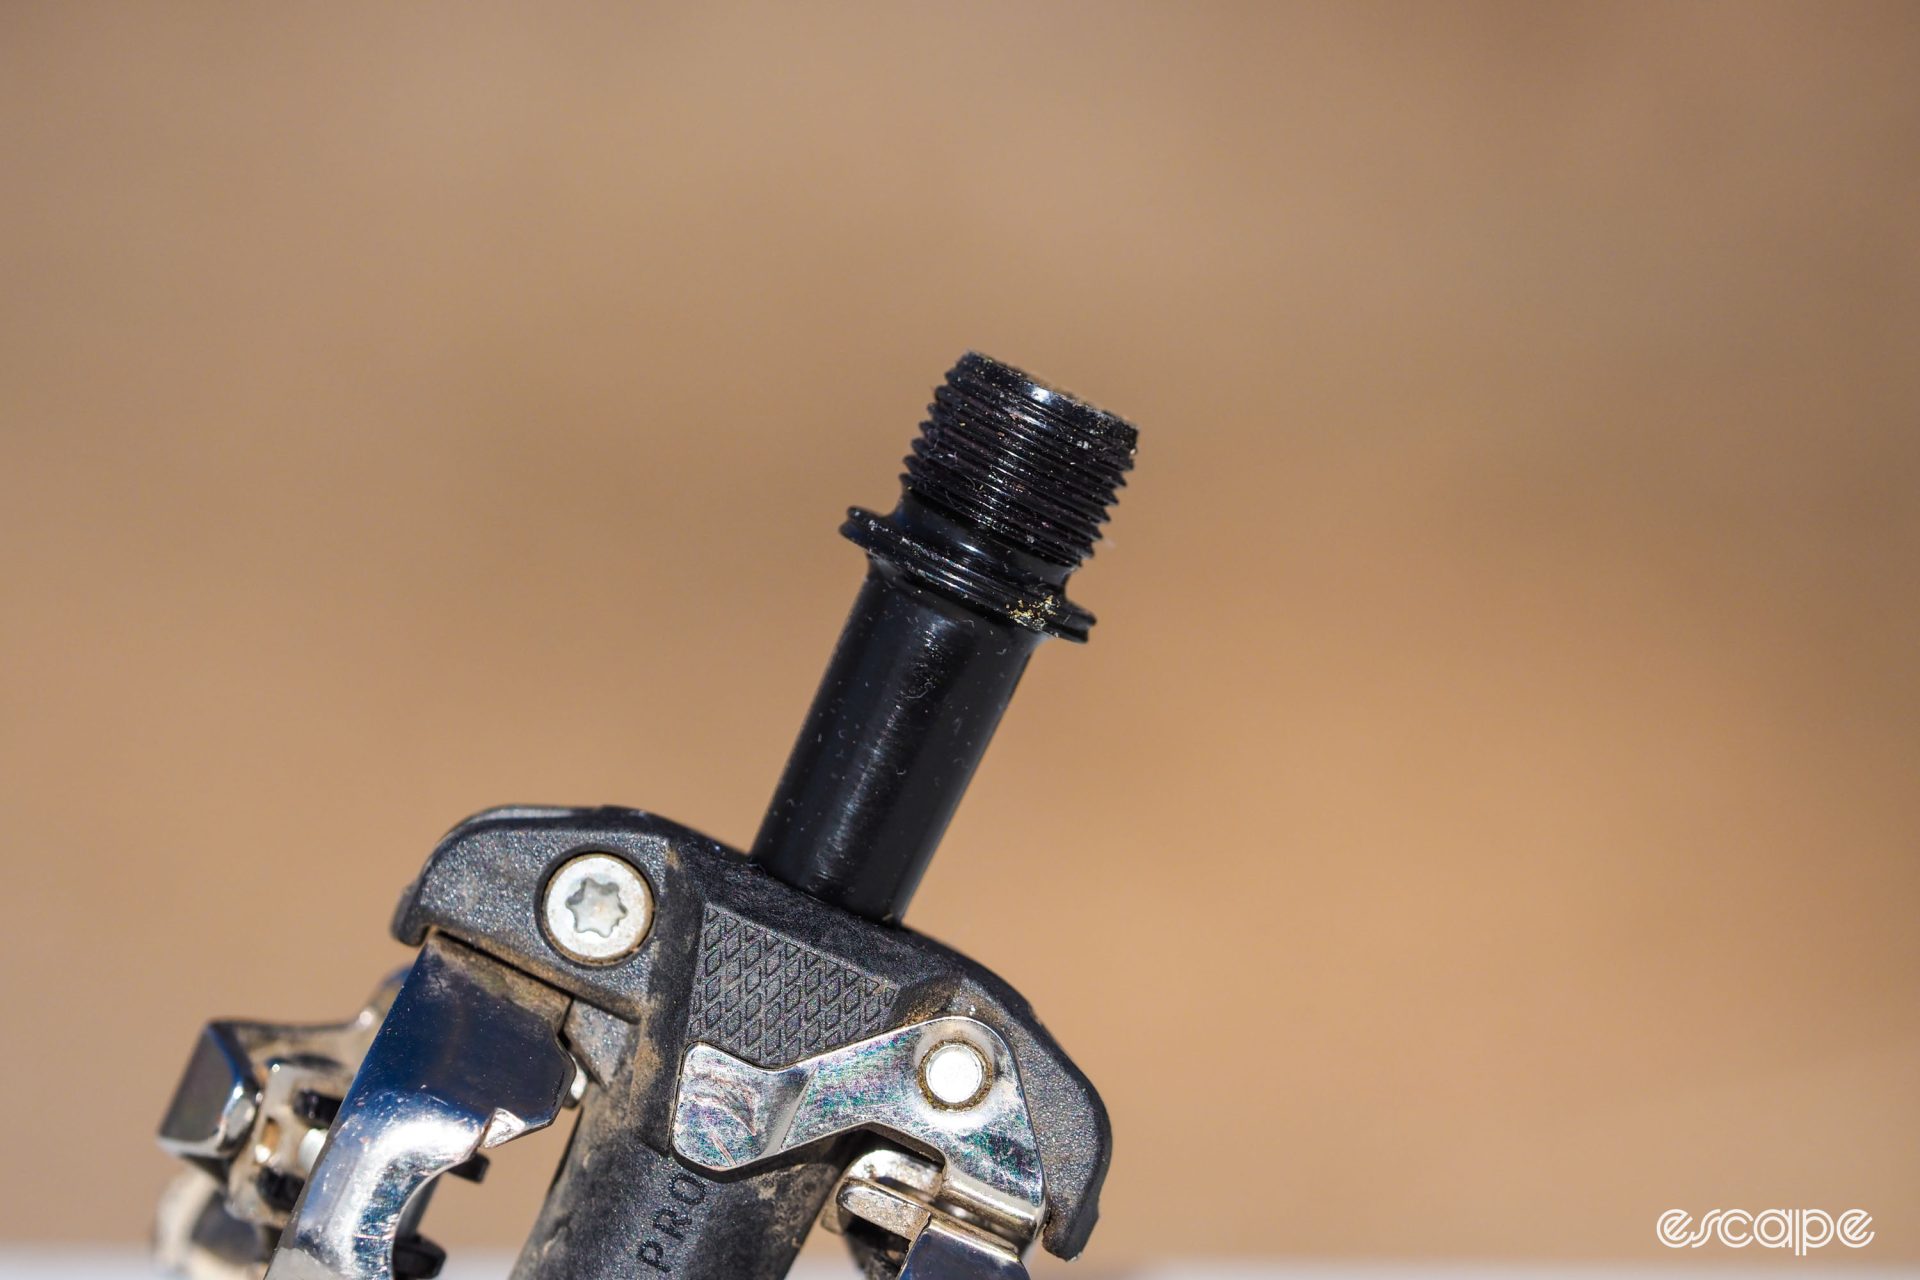 Trek Kovee Pro pedal axle detail